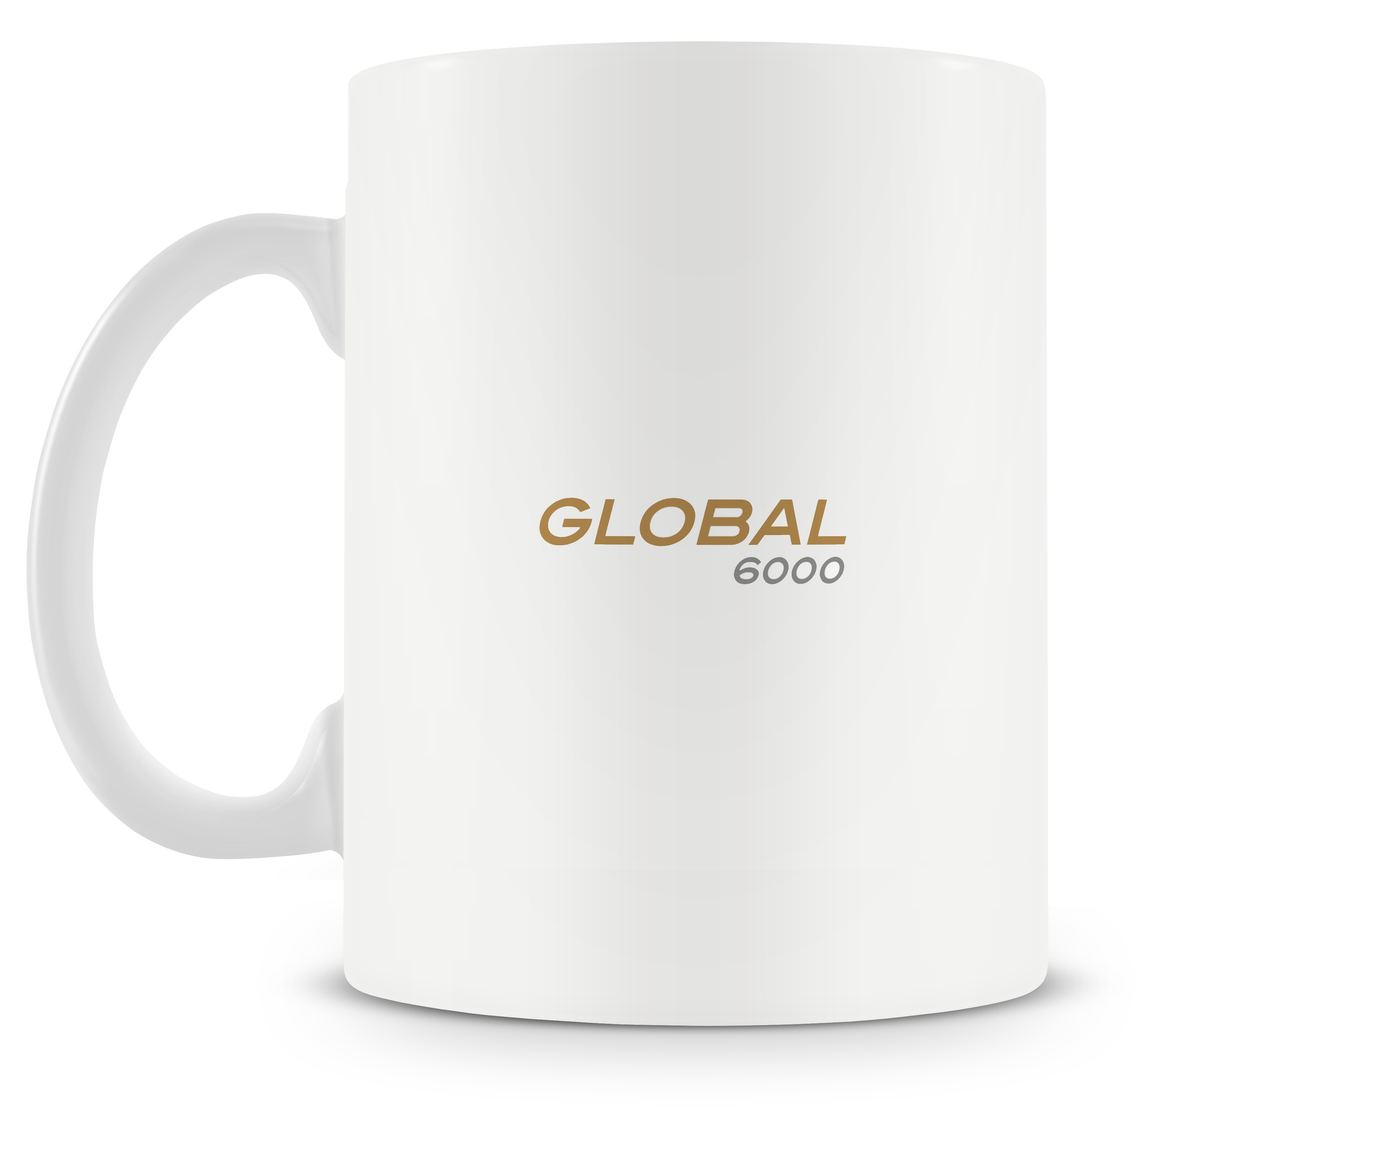 Bombardier Global 6000 Mug - Aircraft Mugs